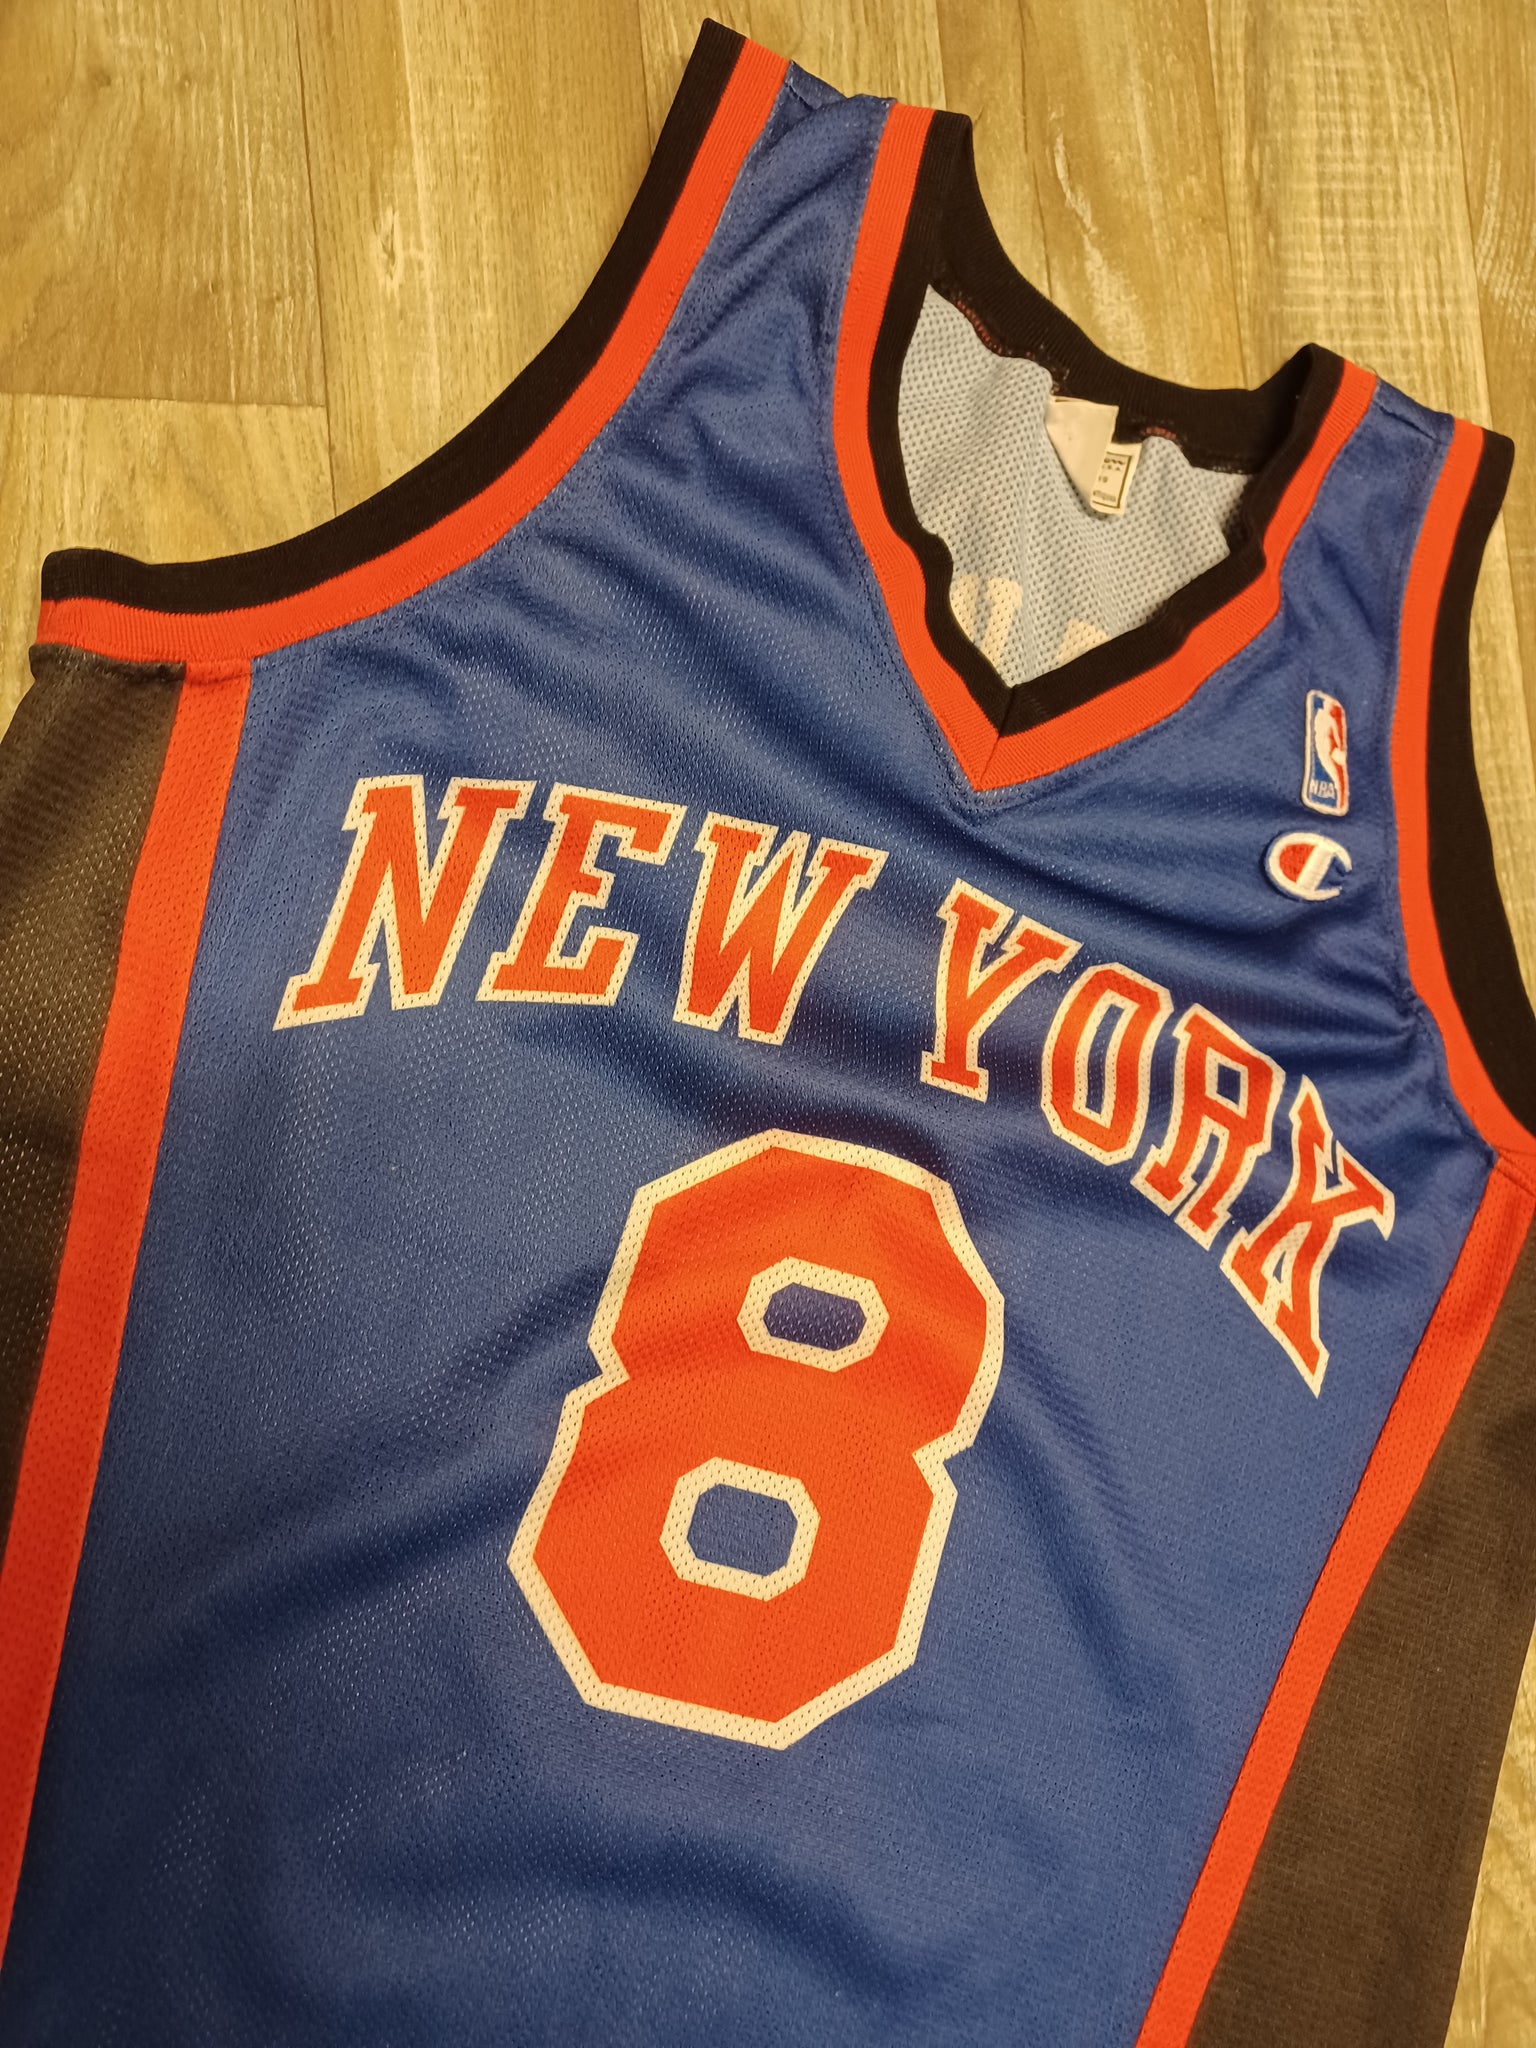 Latrell Sprewell Mitchell & Ness New York Knicks Jersey